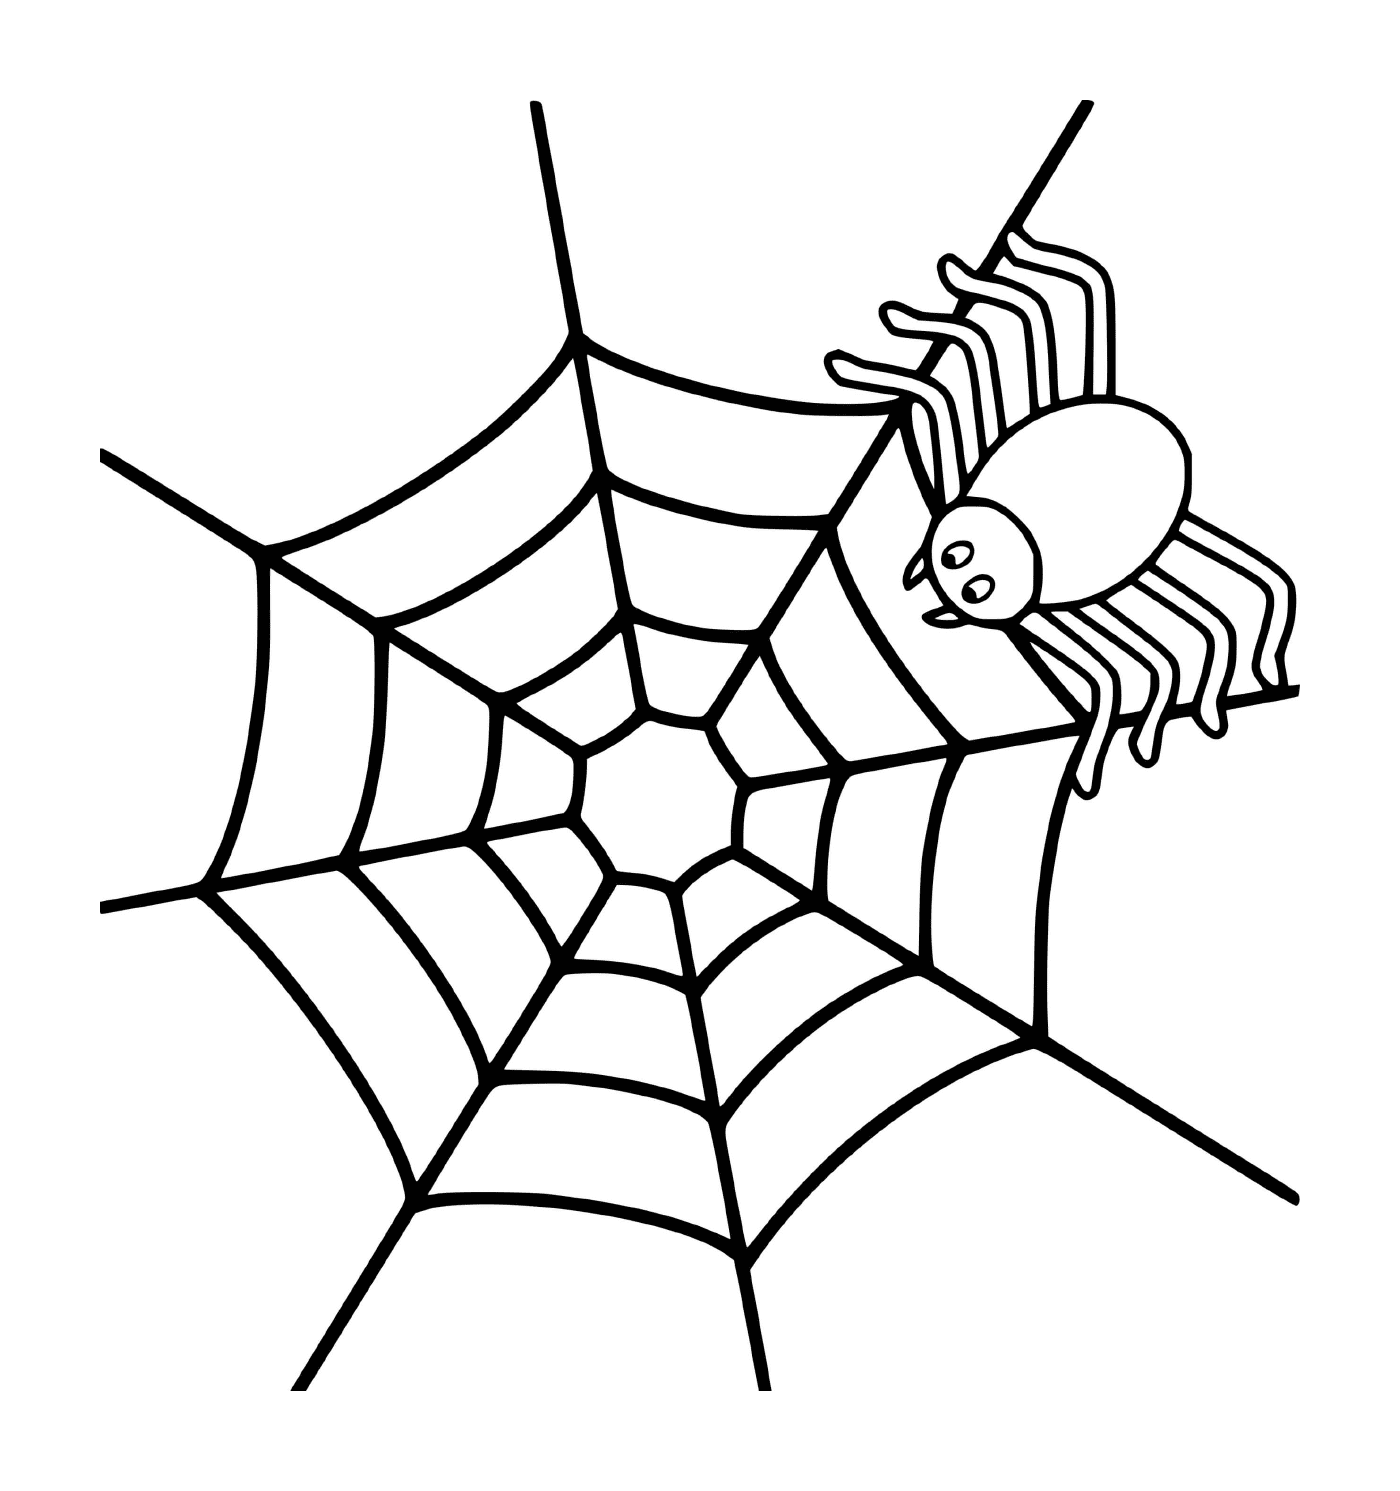  Un semplice ragno su una ragnatela 